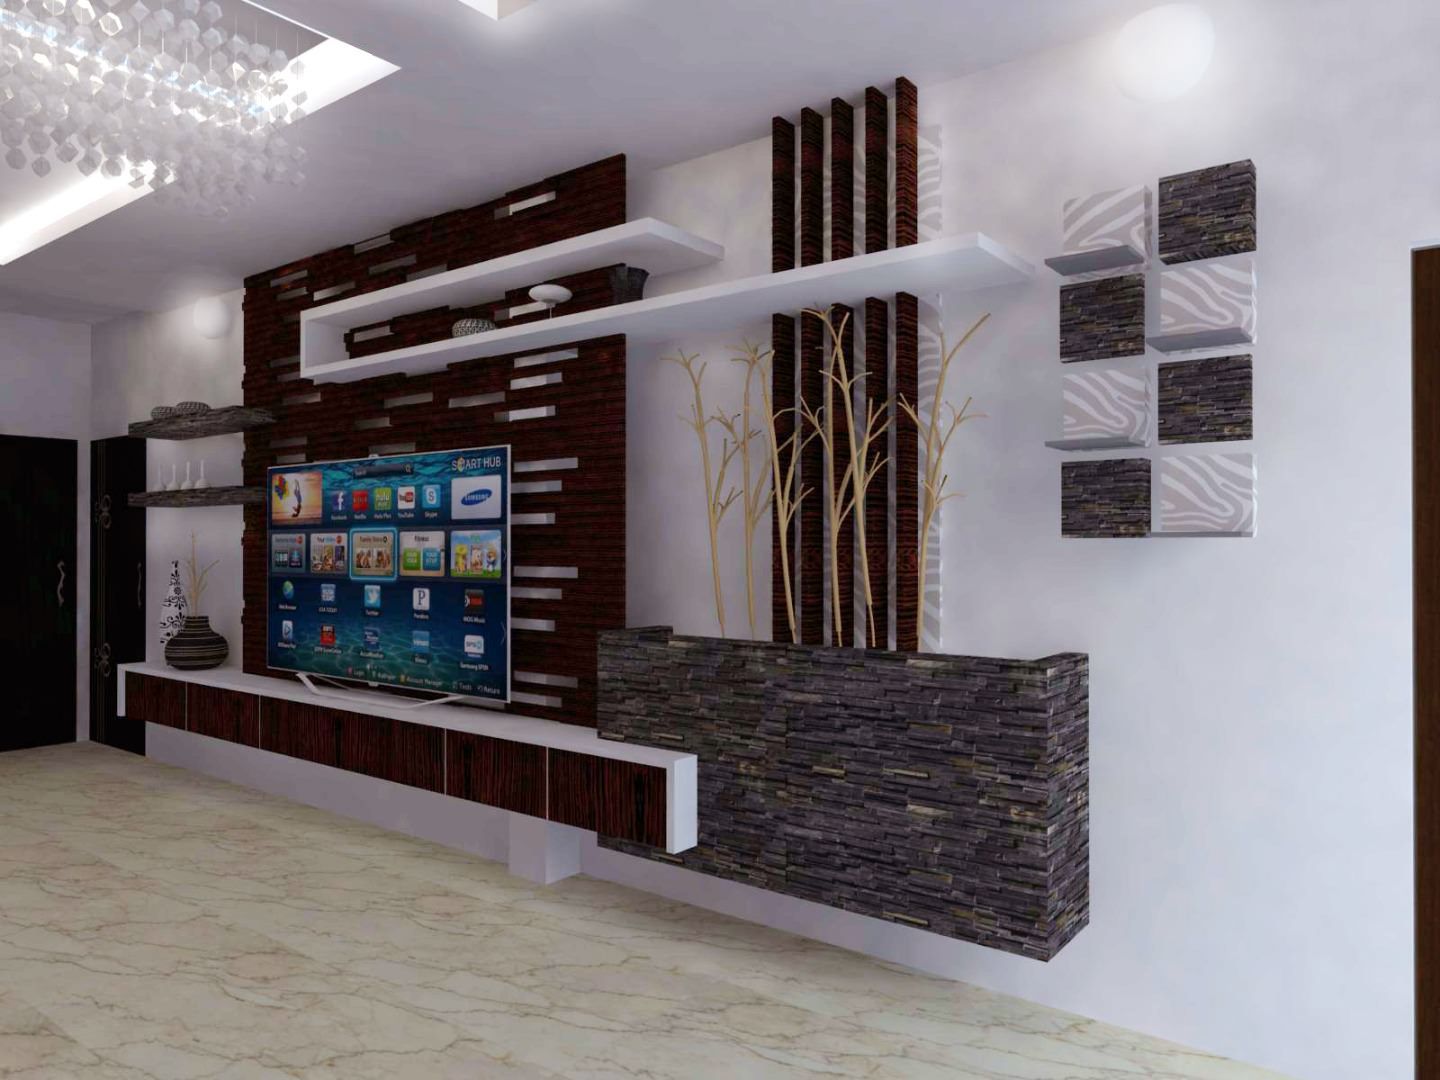 Tv Fireplace Wall Unit Designs Fresh Interior Design Indian Units Google Search Unit